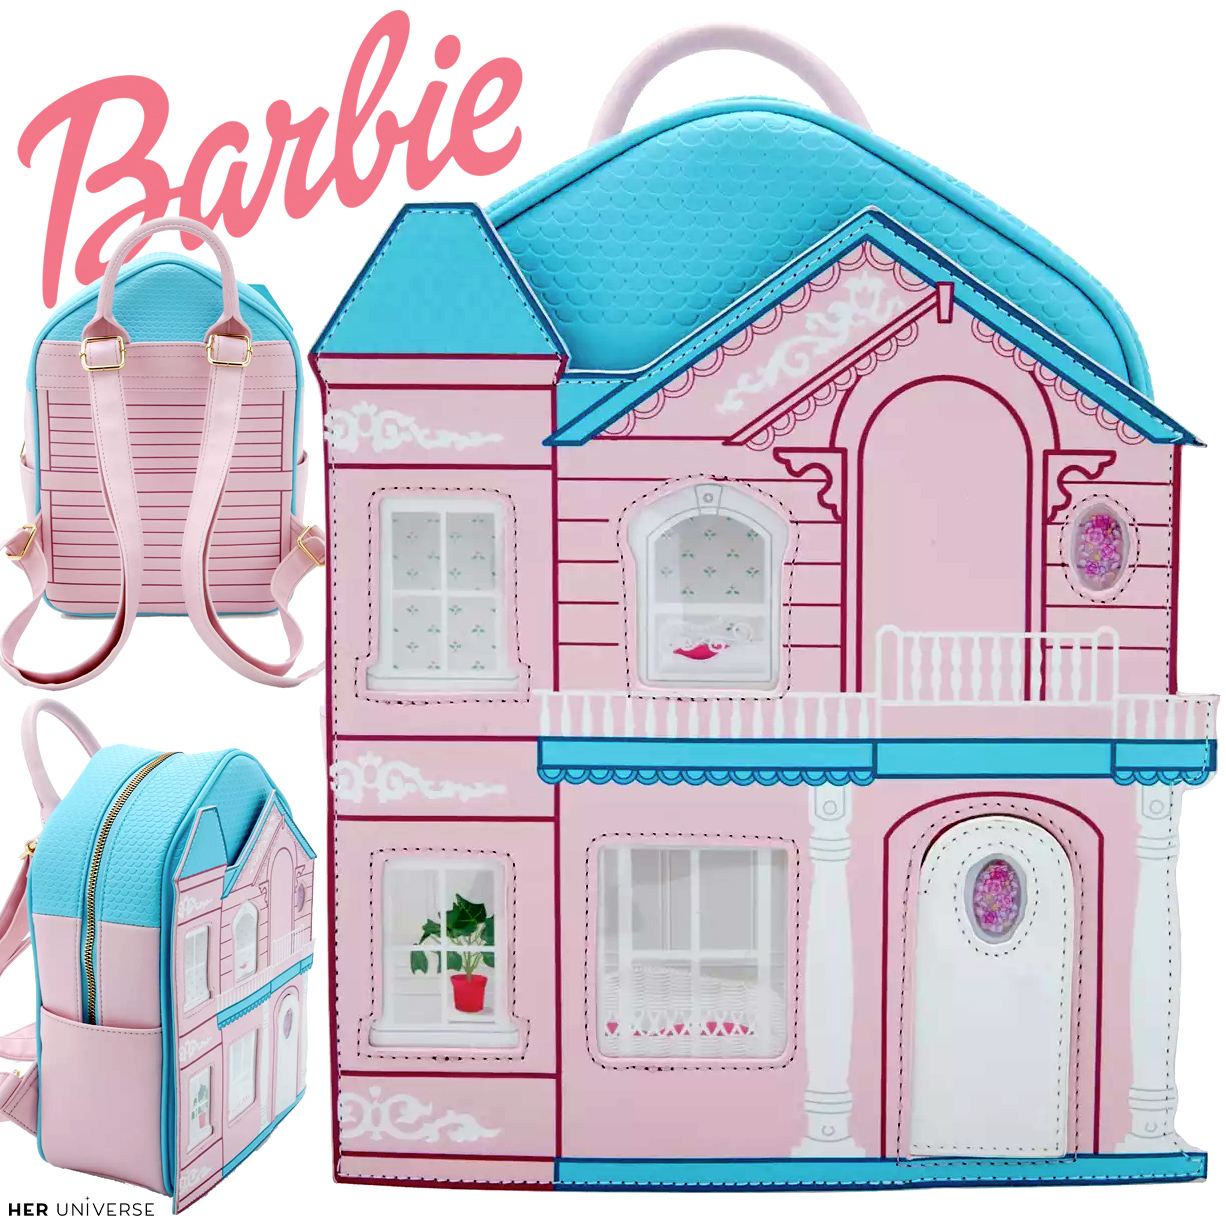 Mini-Mochila Casa dos Sonhos da Barbie (Dreamhouse Backpack)